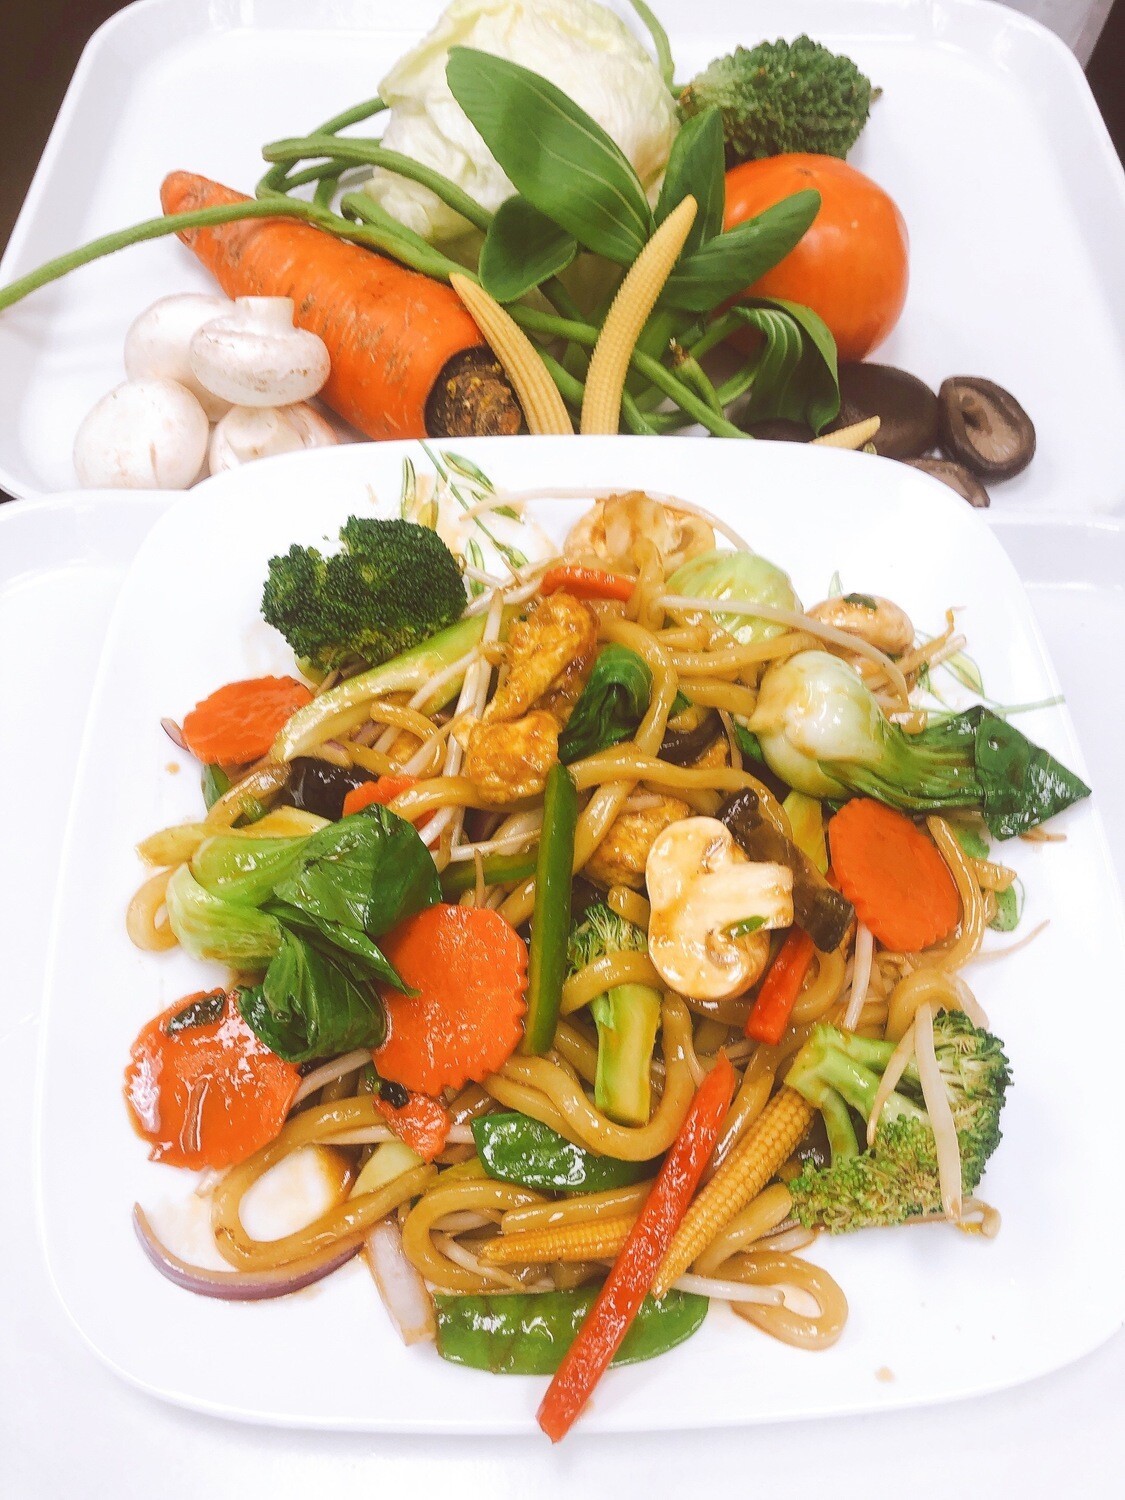 618- Udon Stir Fried with Vegetables, Mushroom, and Tofu